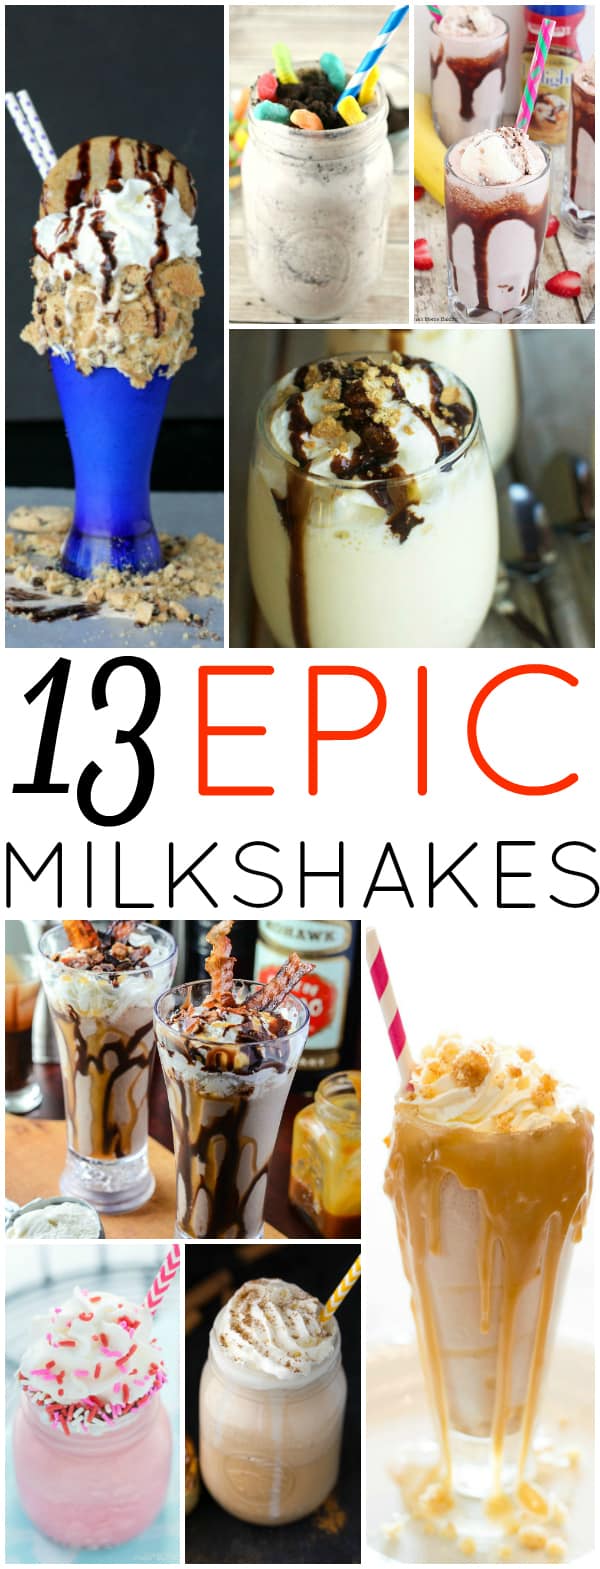 13 Epic Milkshakes